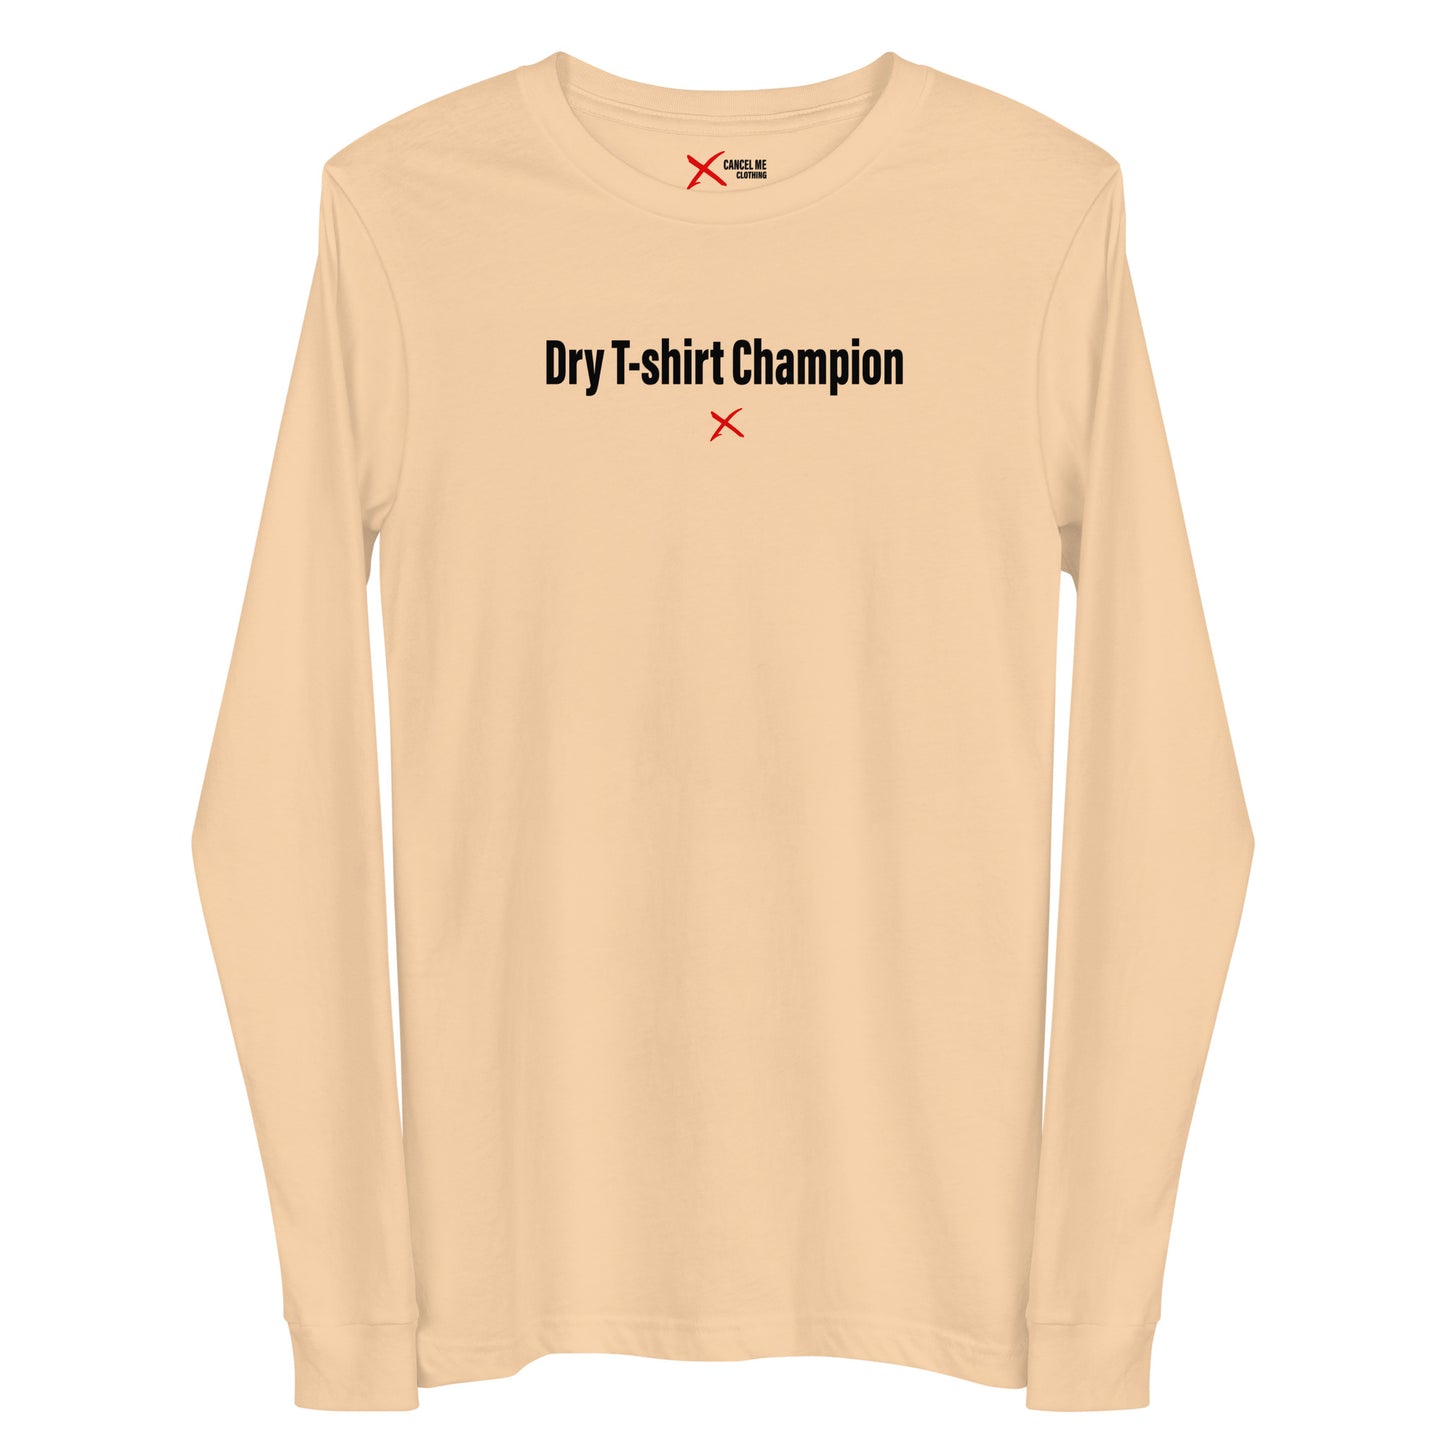 Dry T-shirt Champion - Longsleeve